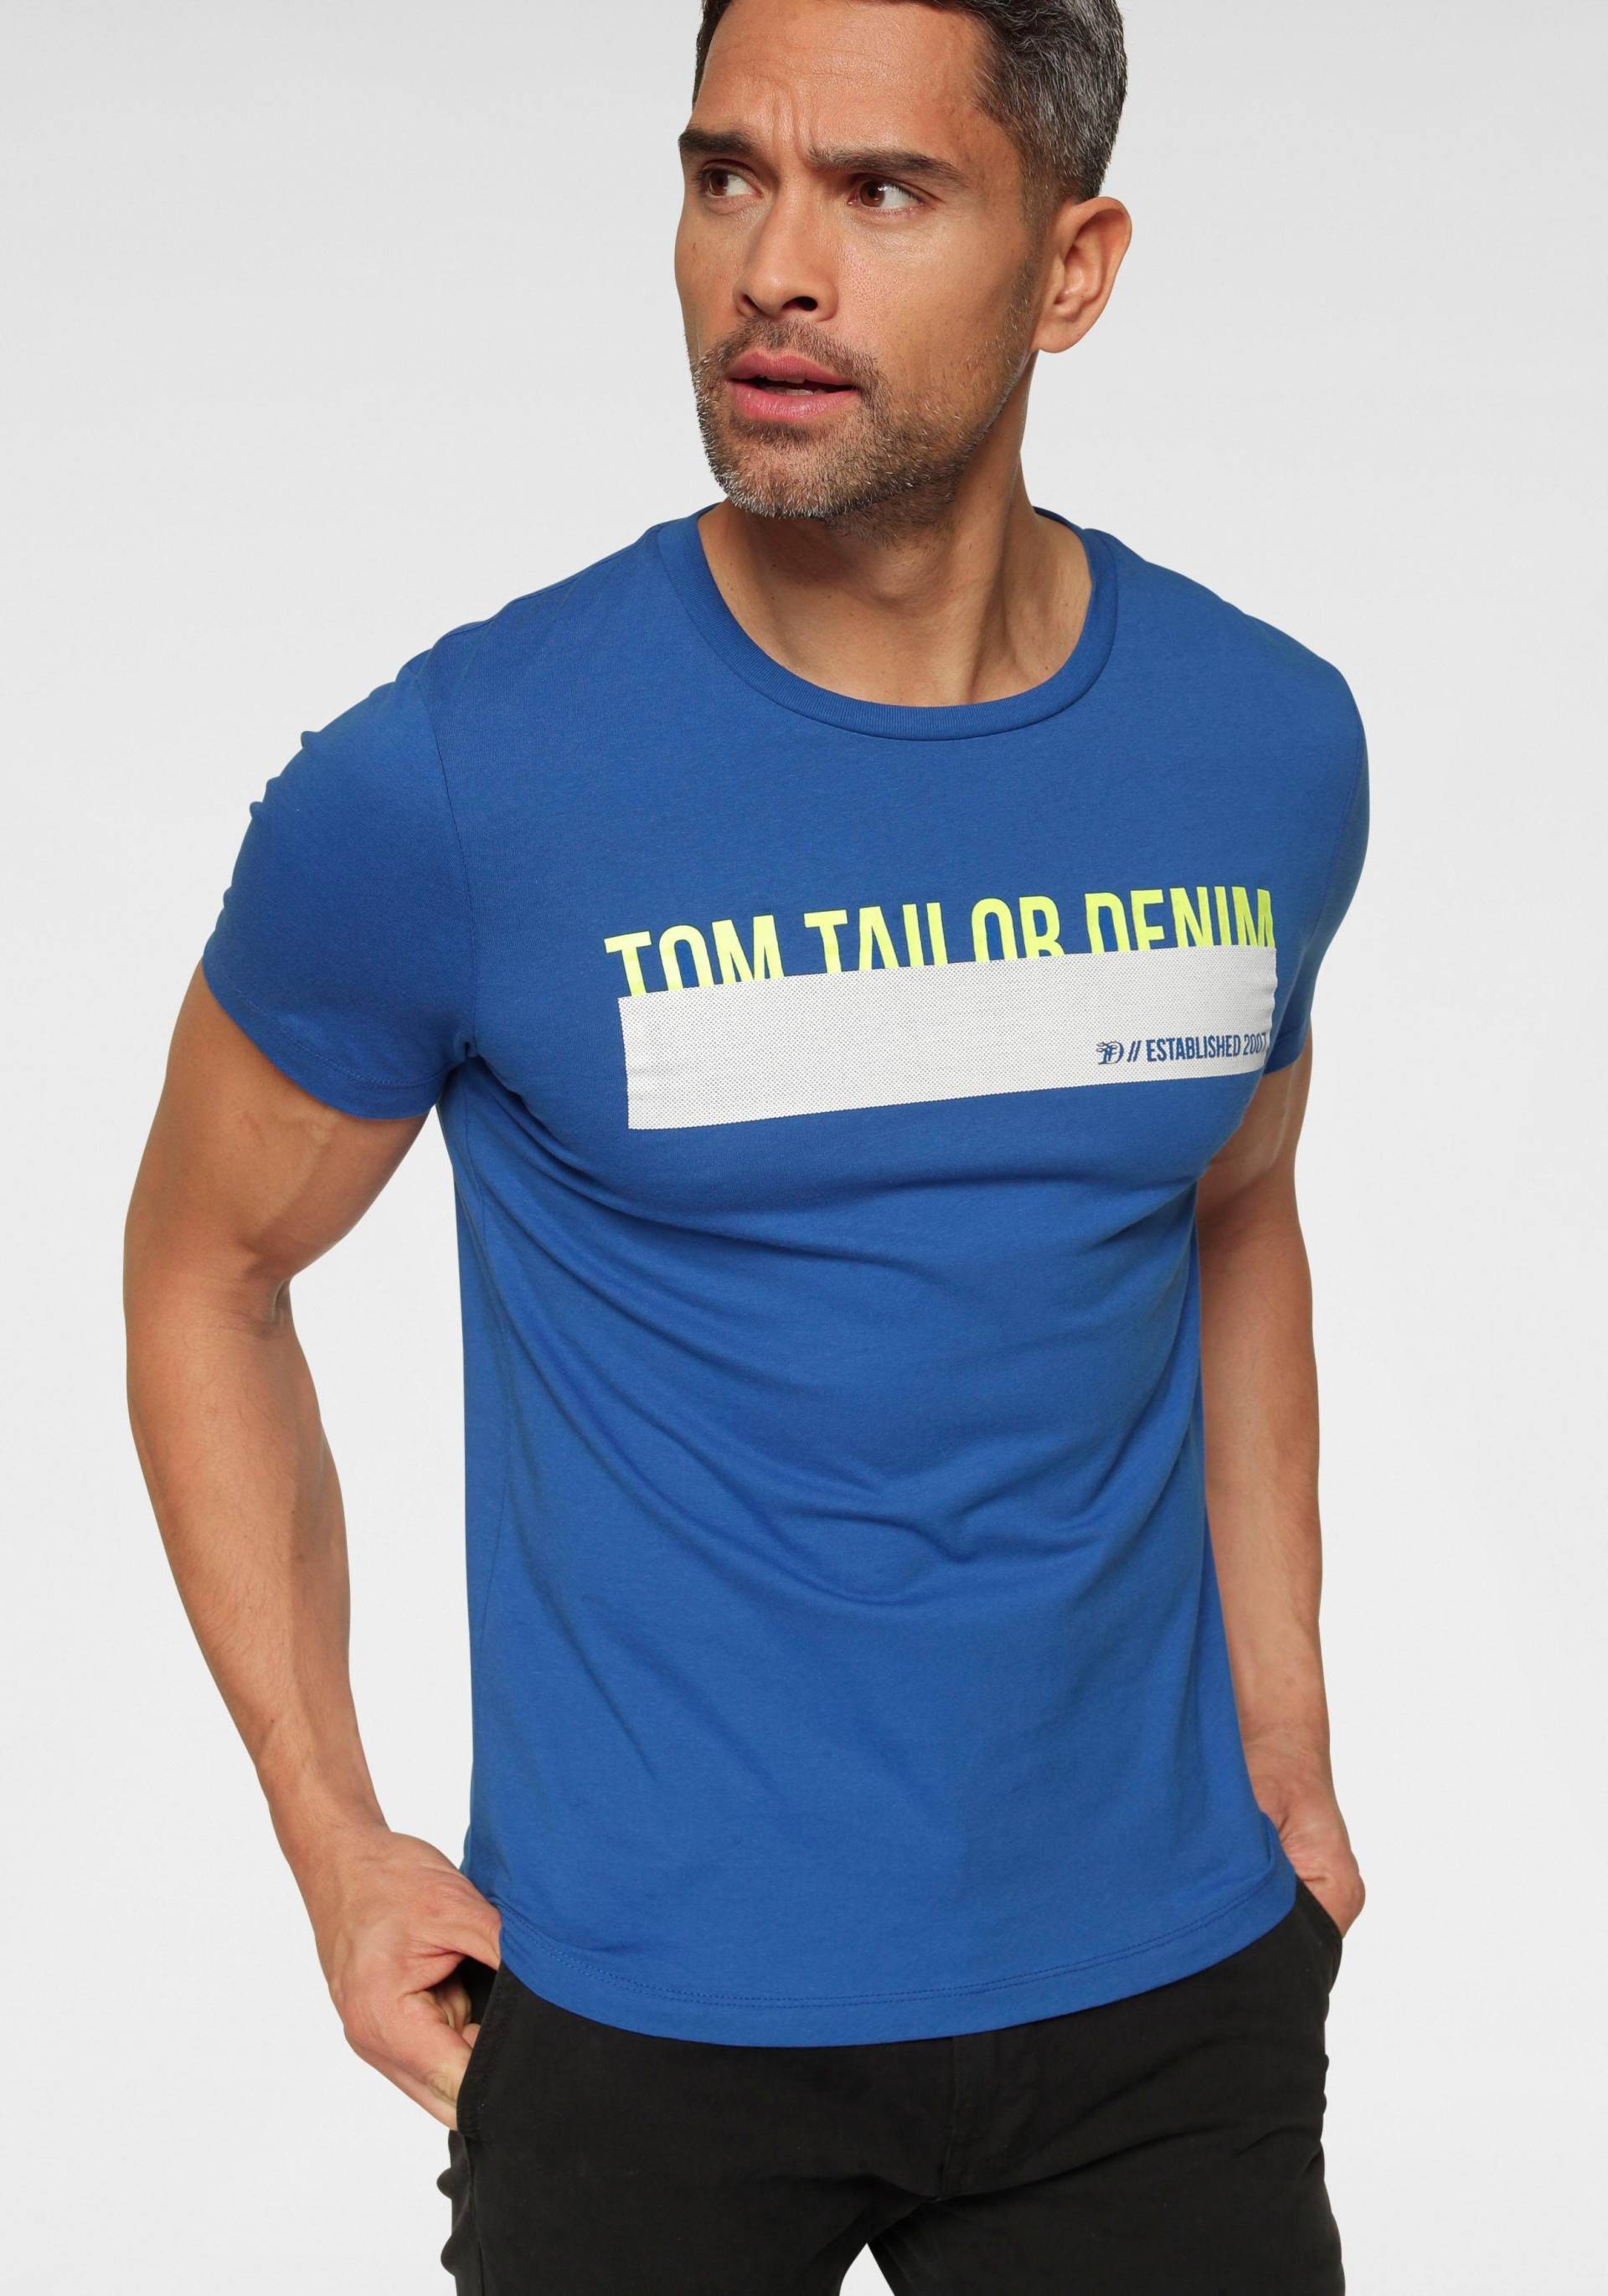 TOM TAILOR Denim T-Shirt von Tom Tailor Denim